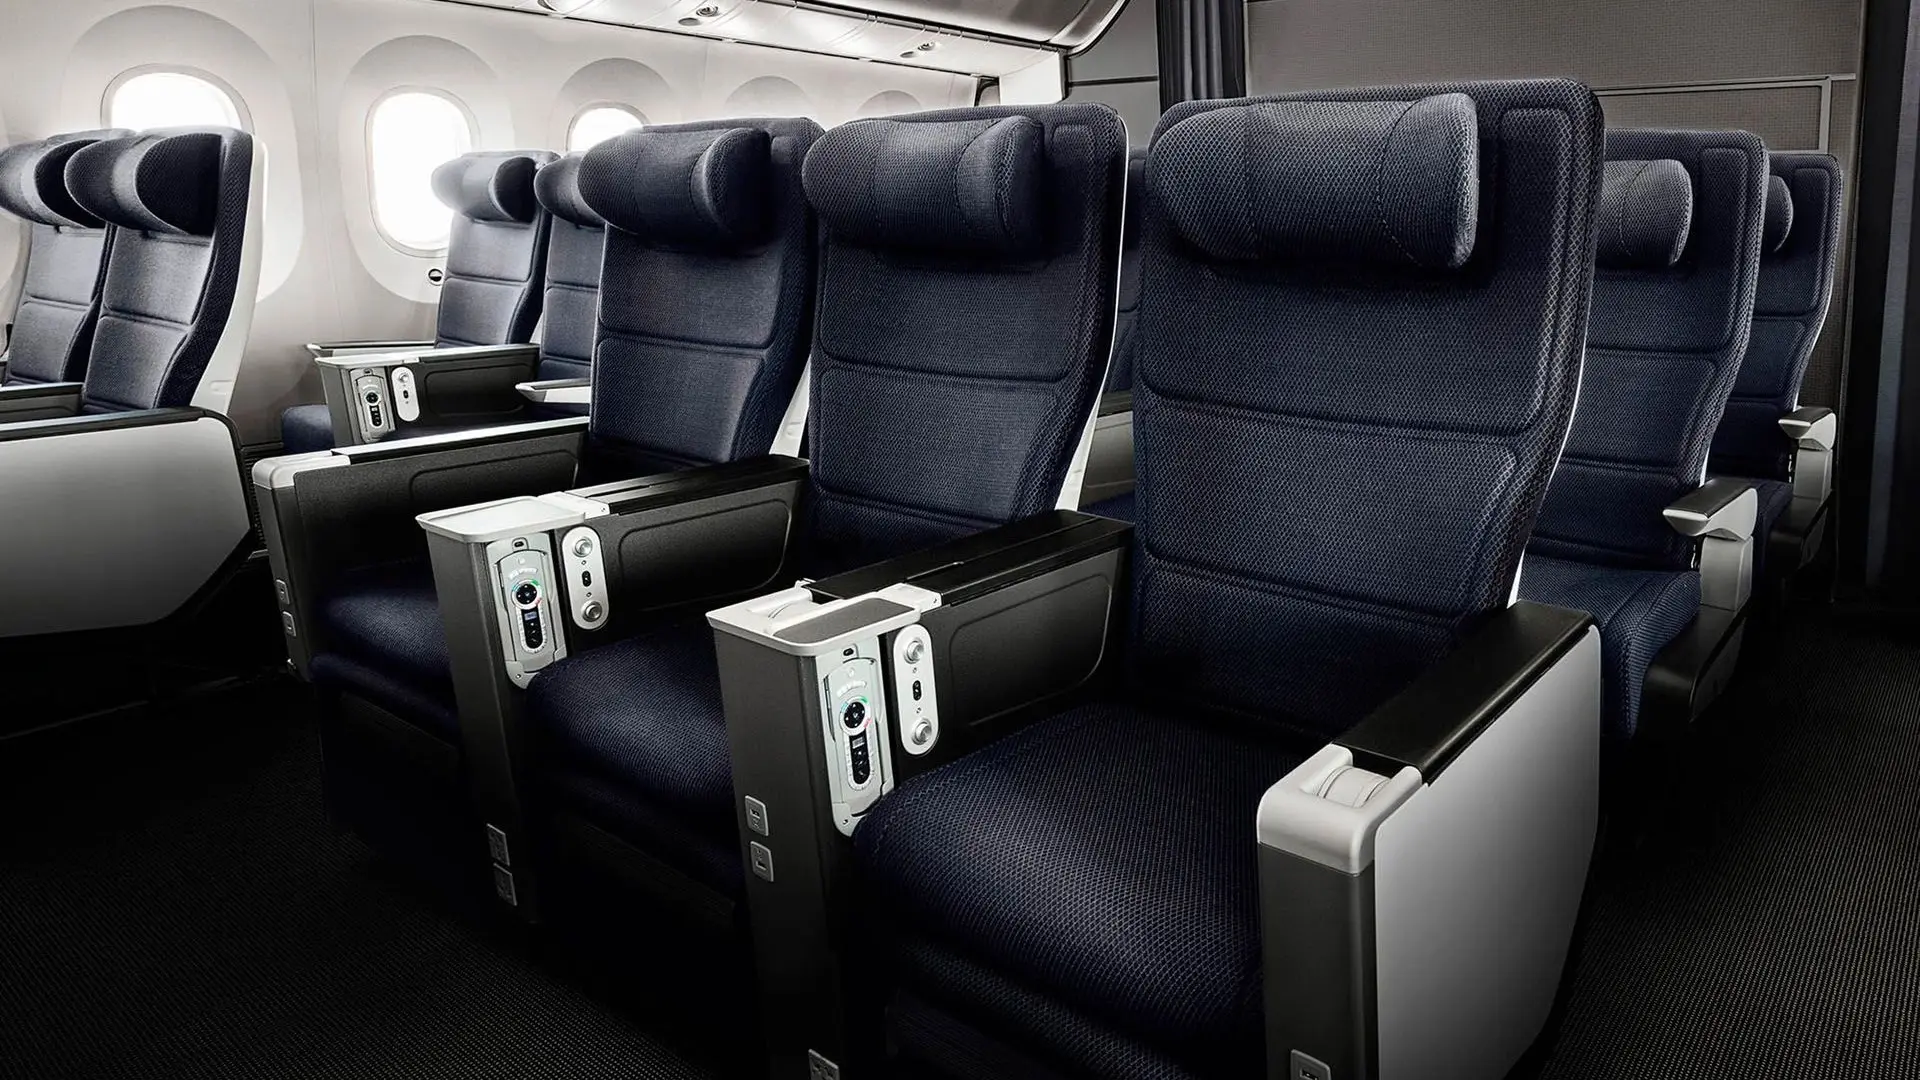 Airline review Cabin & Seat - British Airways - 1